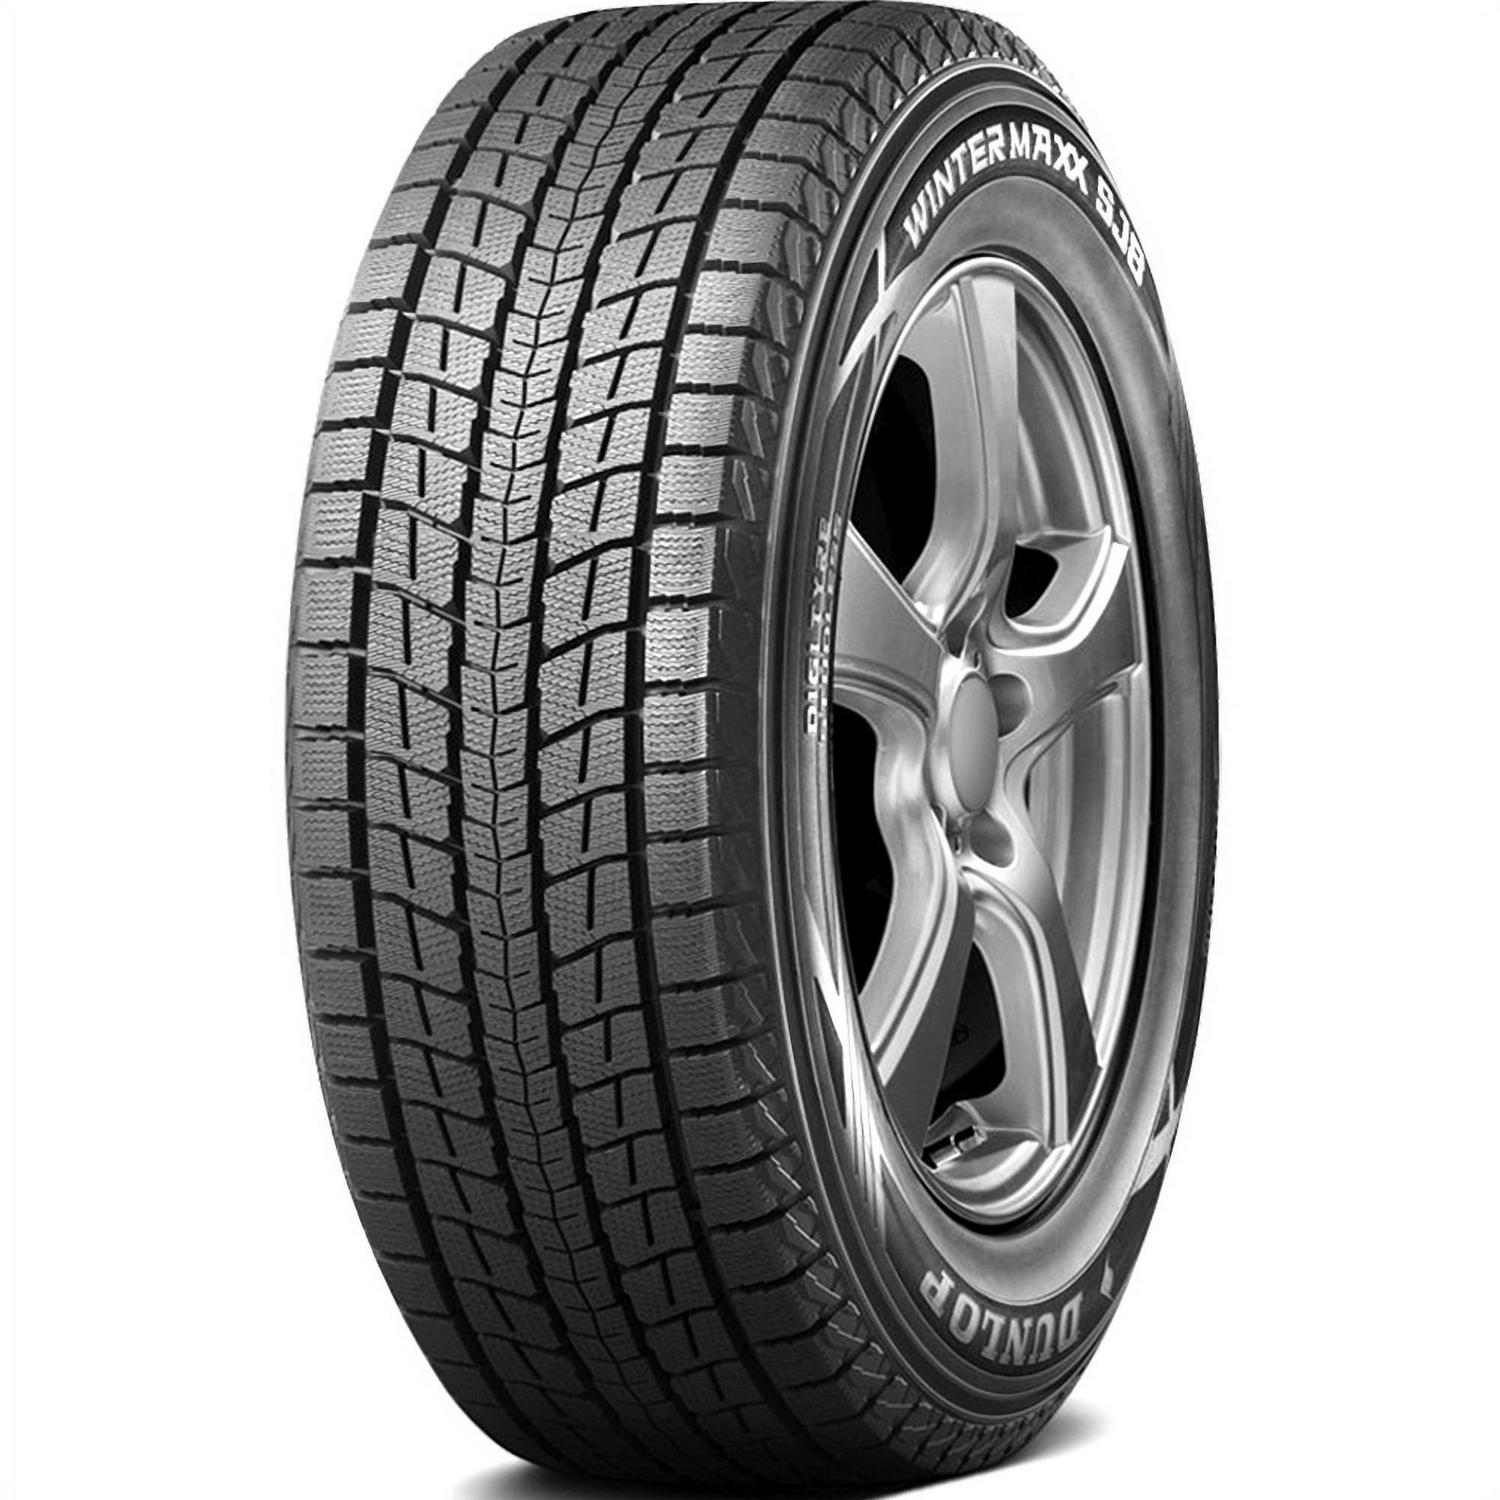 Dunlop Winter Maxx SJ8 225/60R17 99R (Studless) Snow Tire